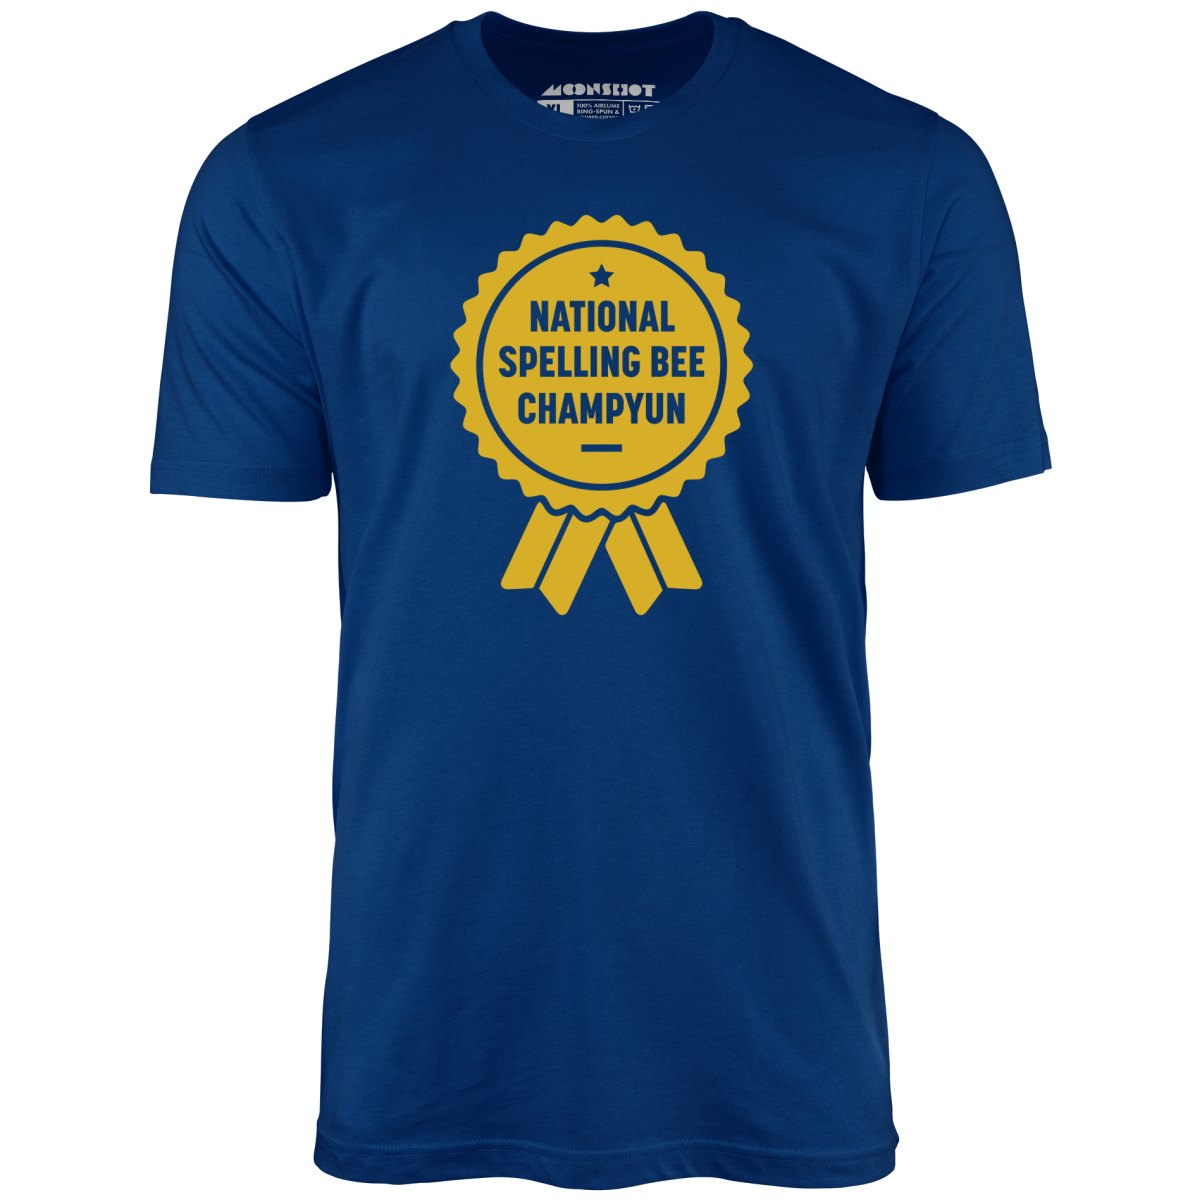 National Spelling Bee Champyun - Unisex T-Shirt